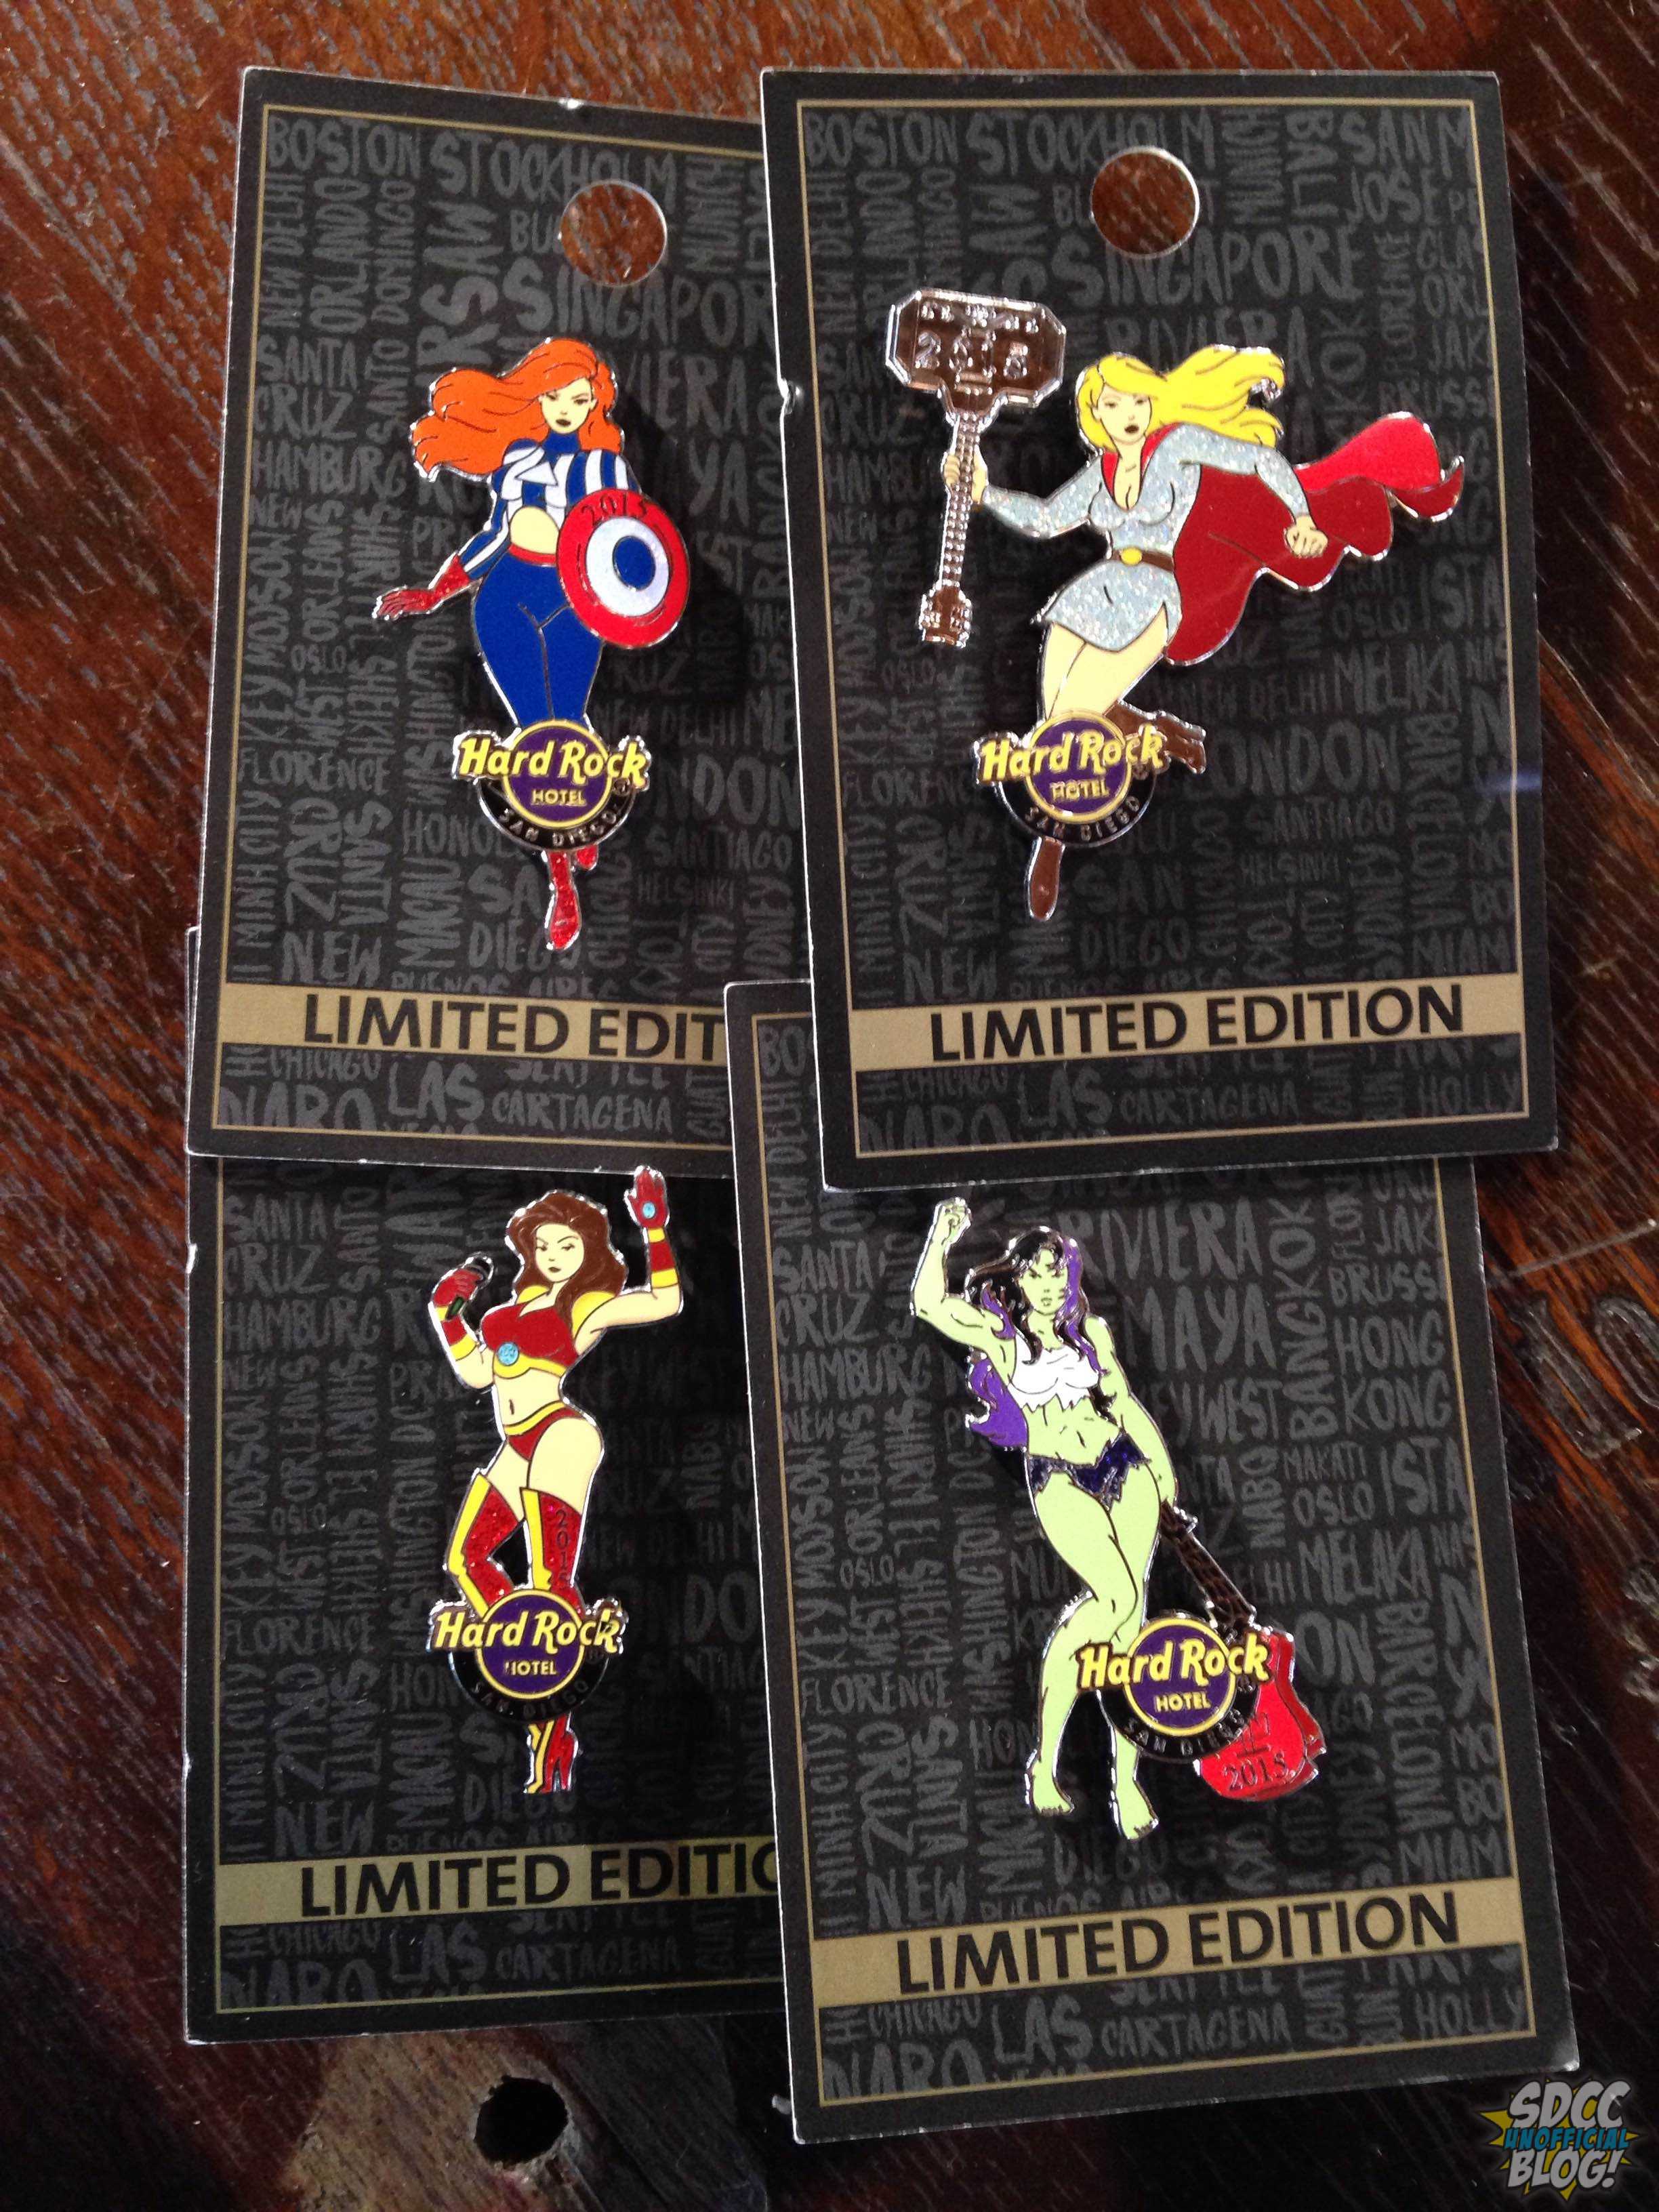 Hard Rock Hotel pins